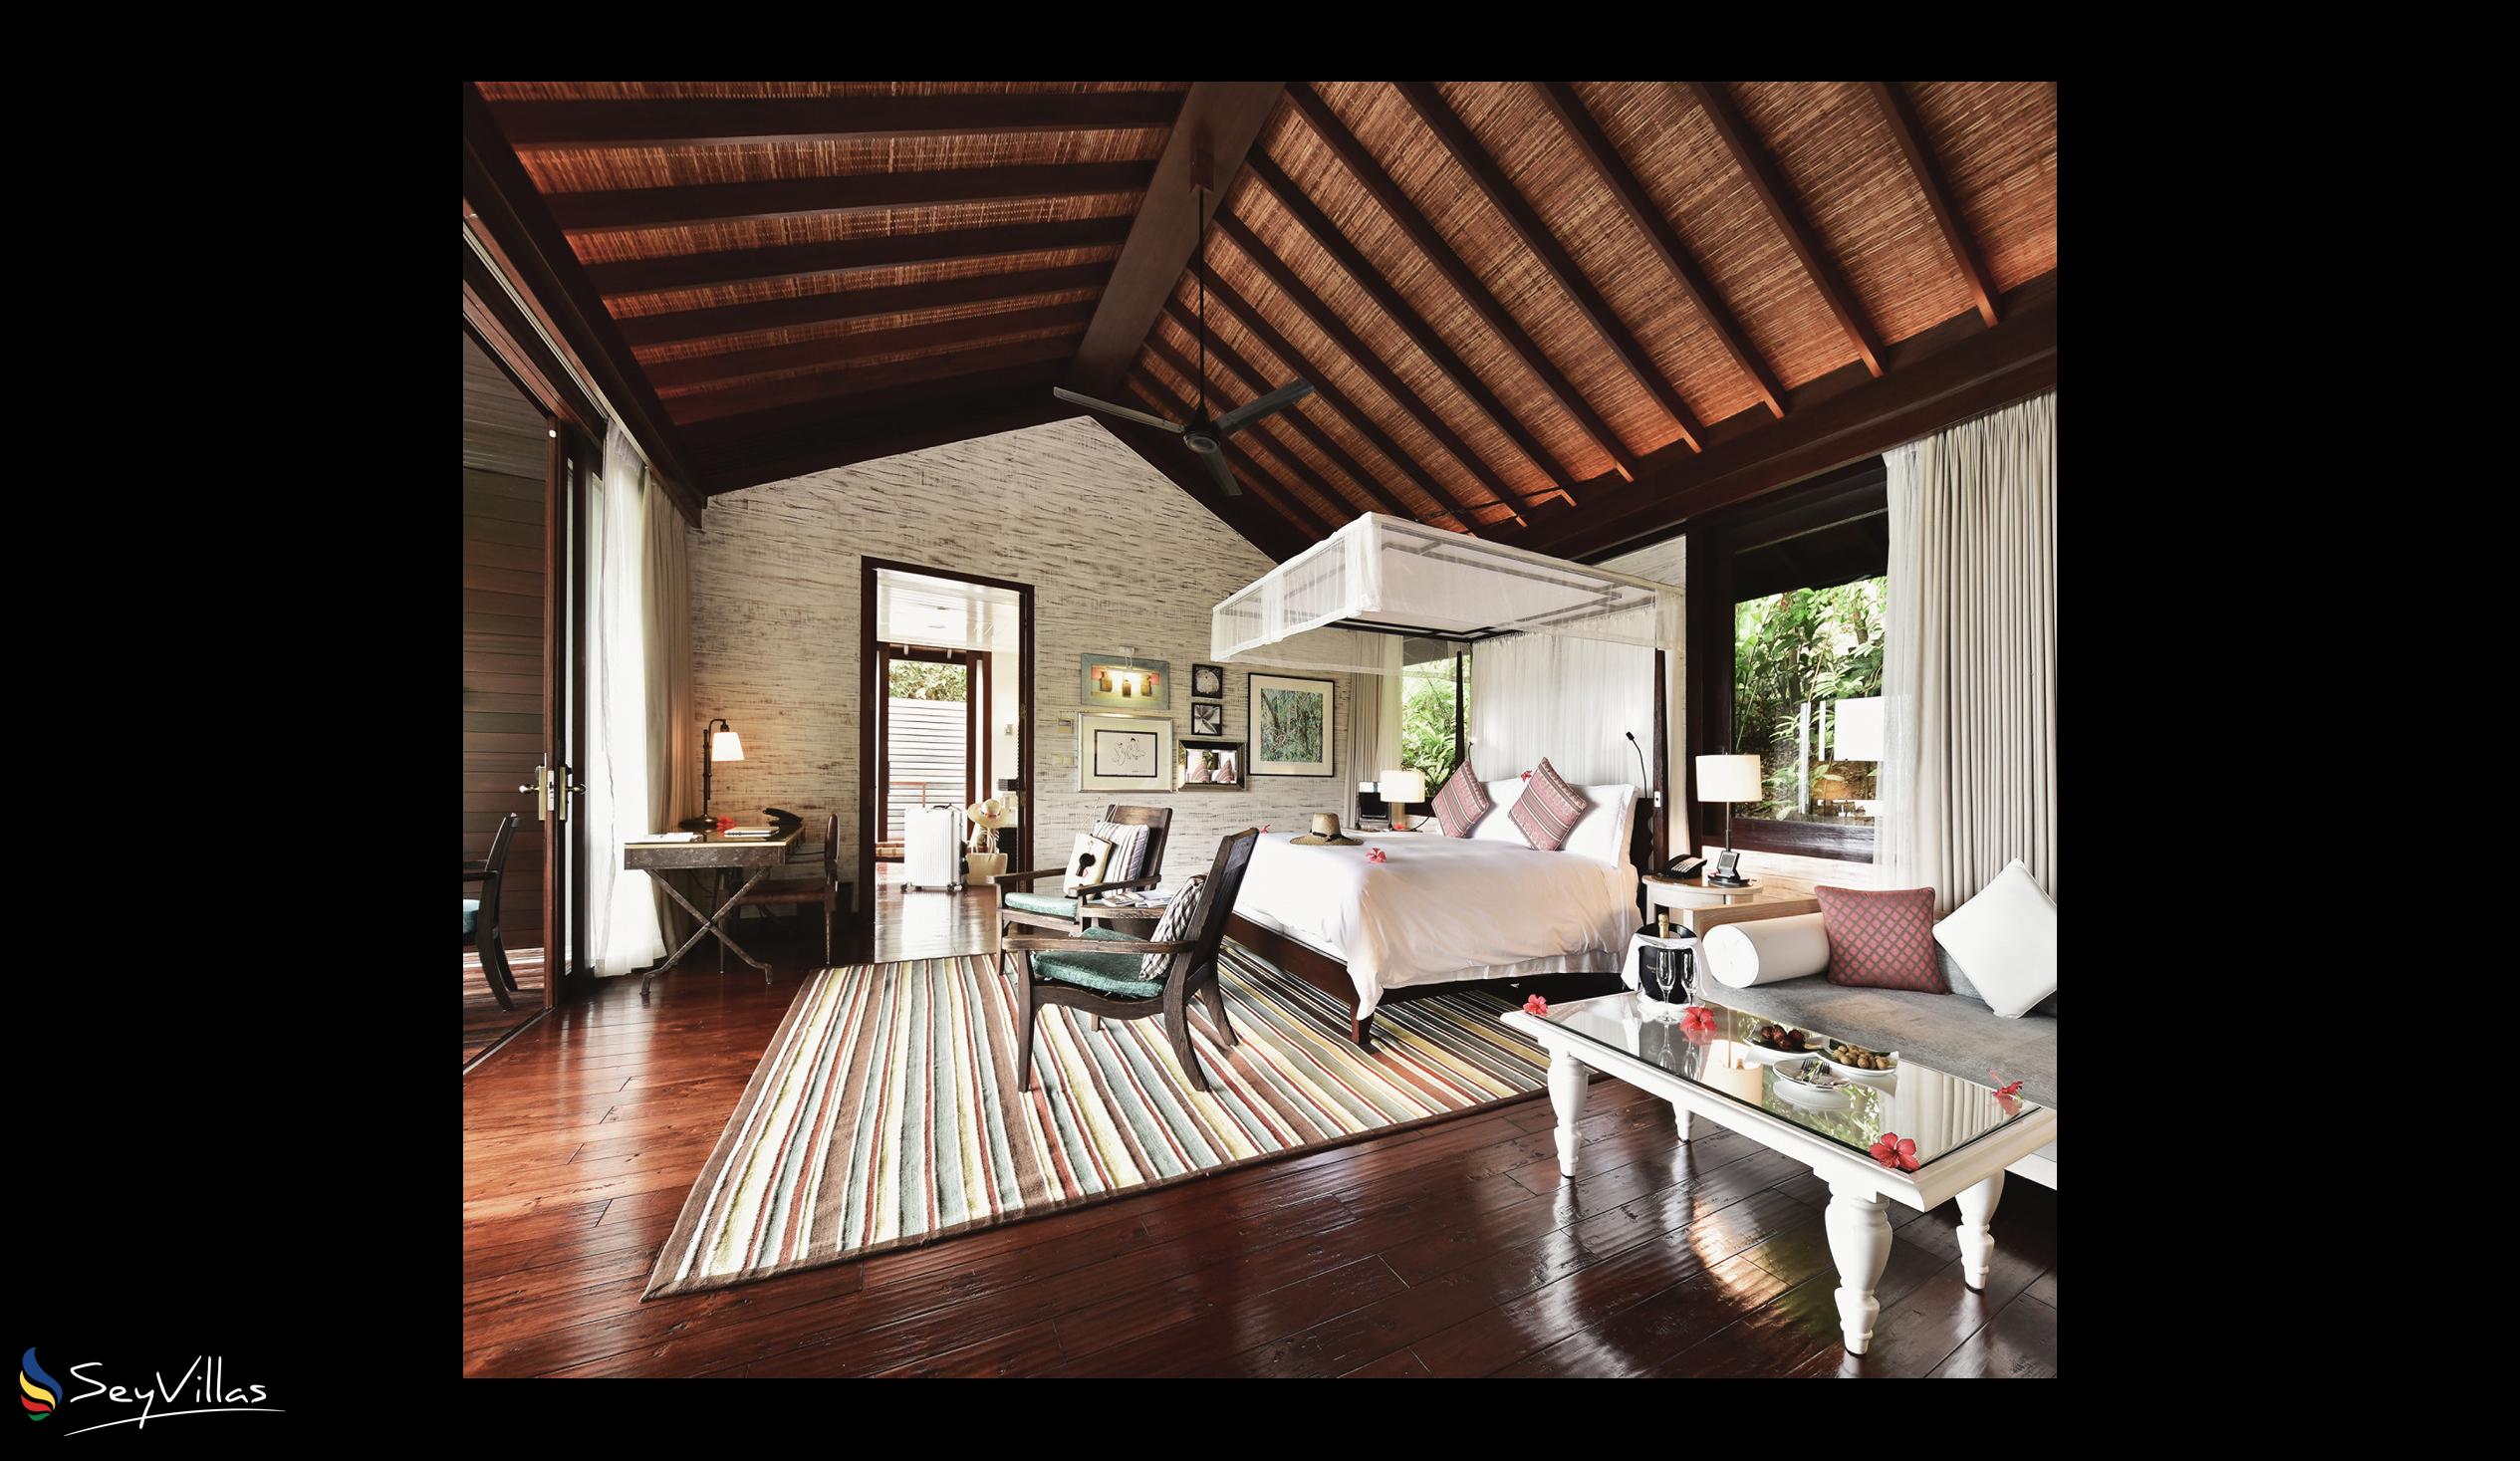 Photo 23: Four Seasons Resort - 2-Bedroom Hilltop Ocean View Suite - Mahé (Seychelles)